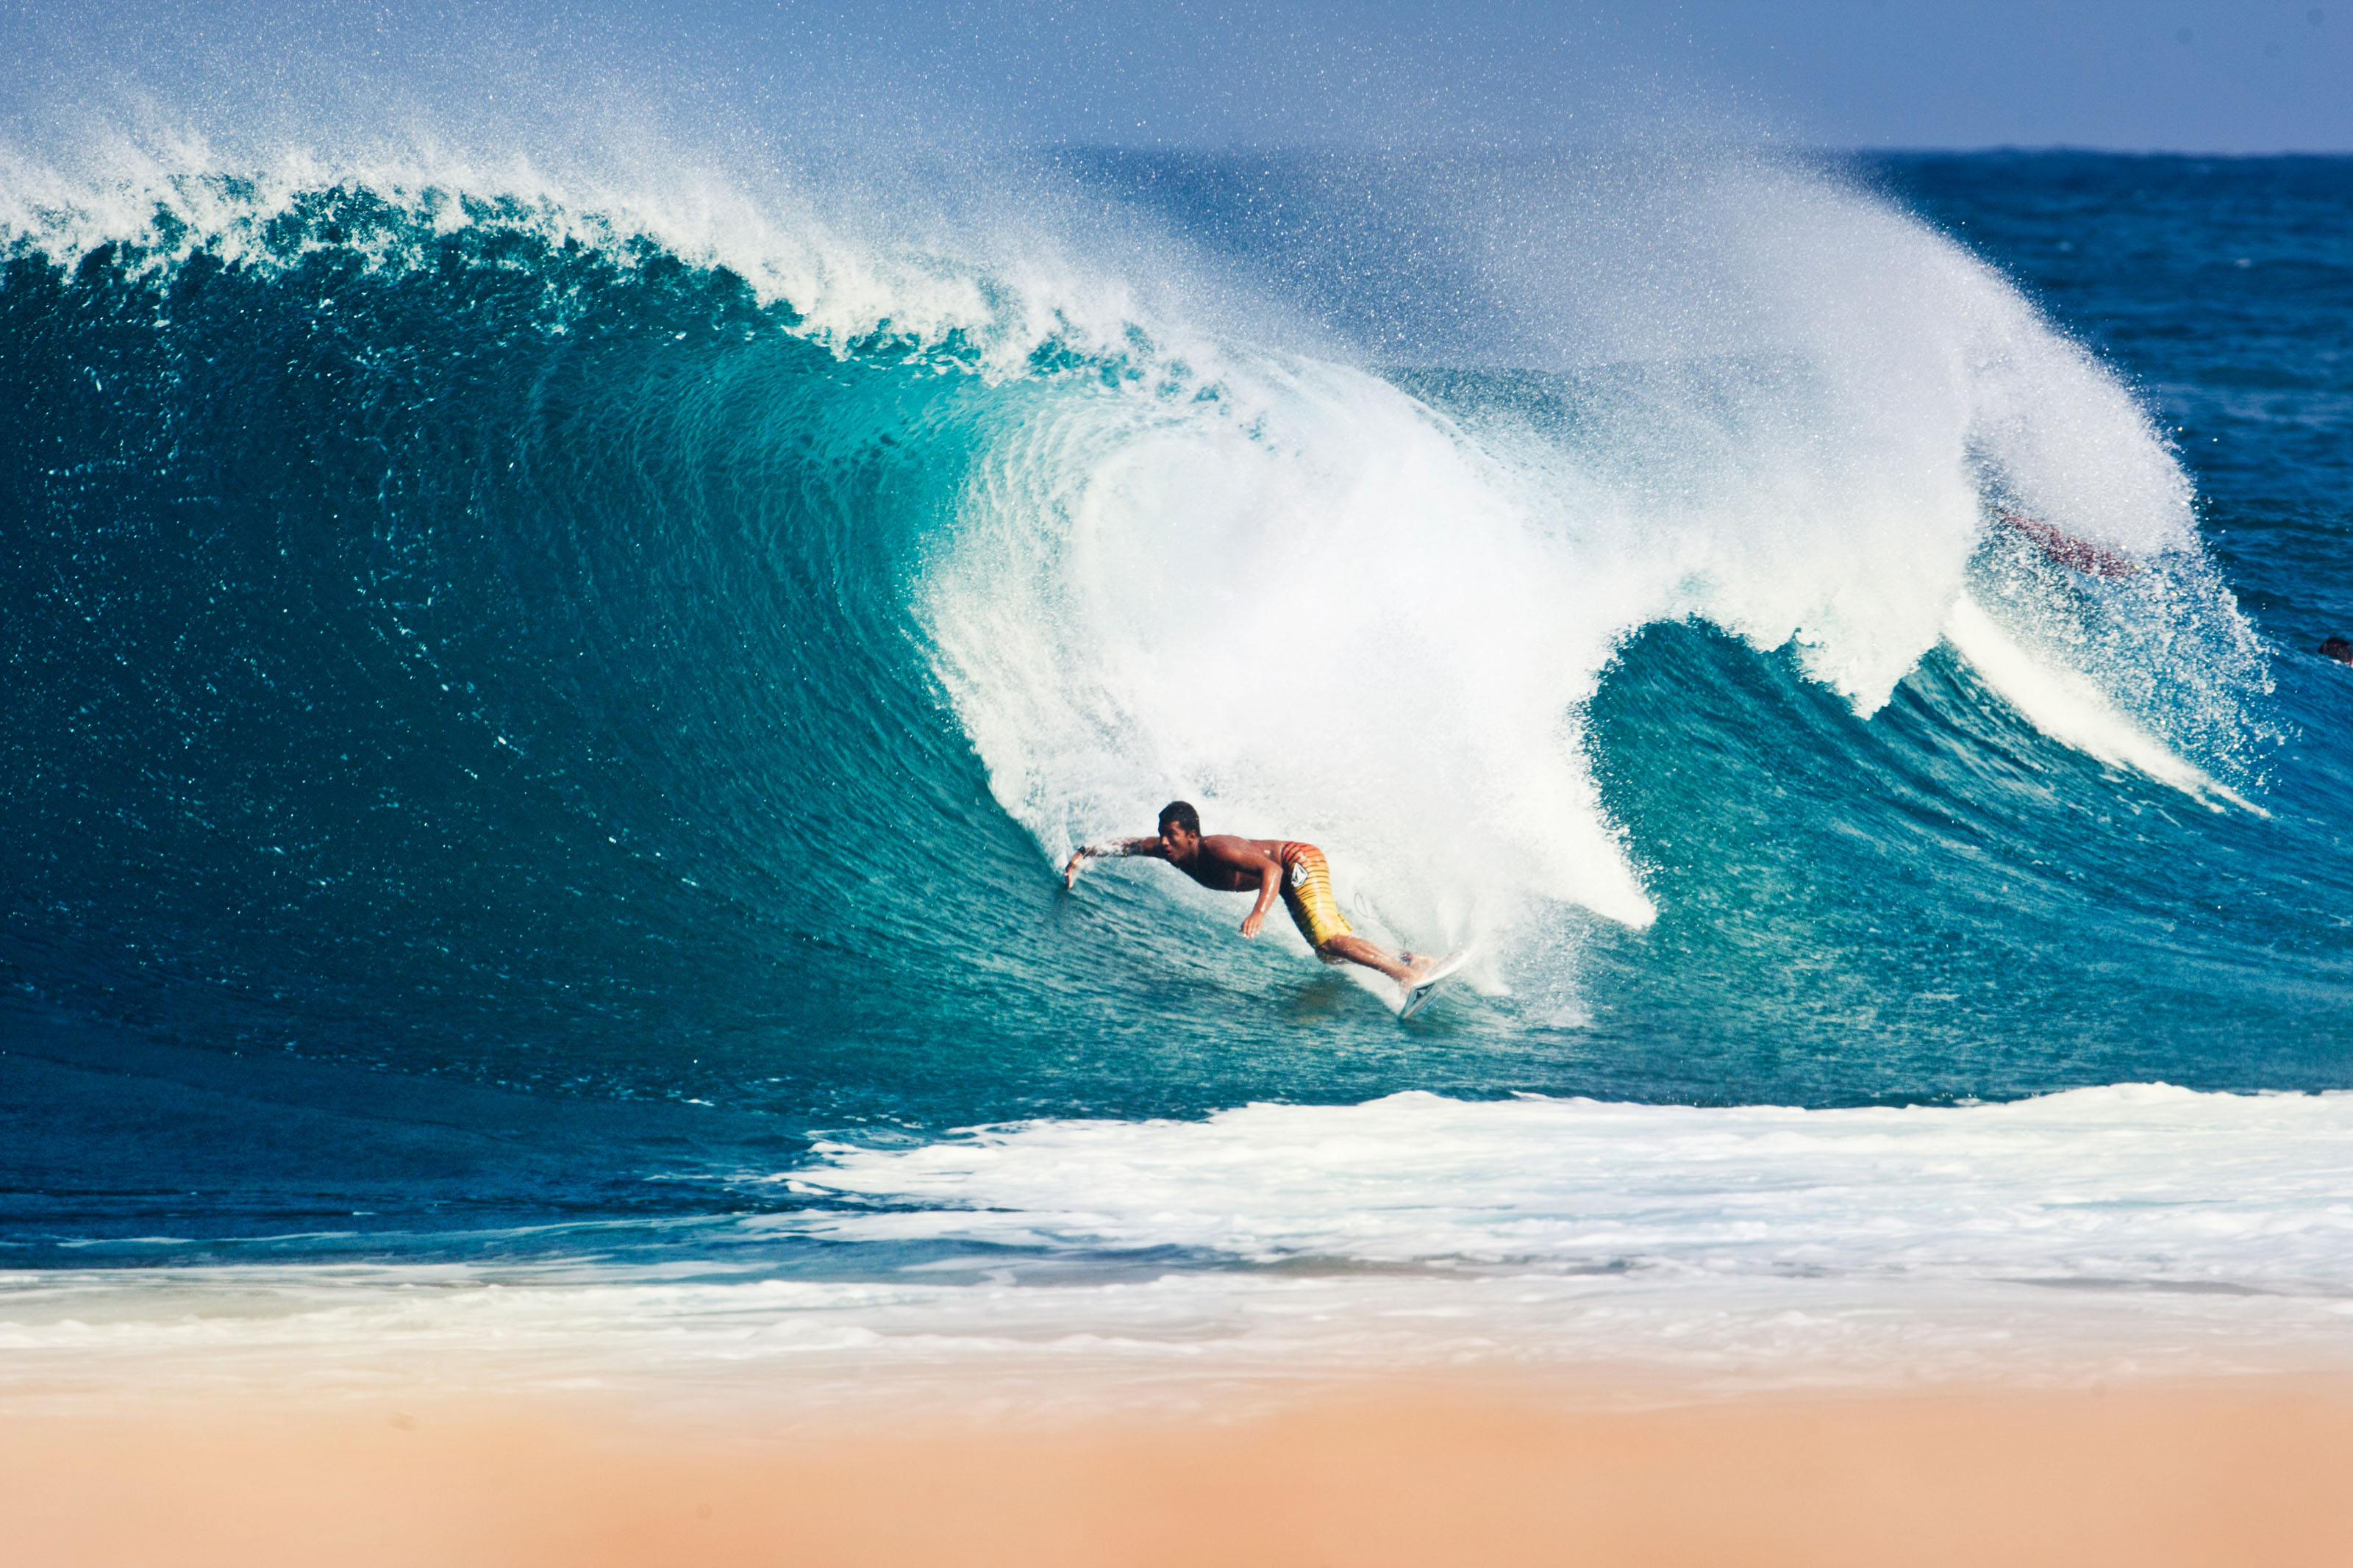 Costa Rican surfer earns fame in Hawaii - Enchanting Costa Rica